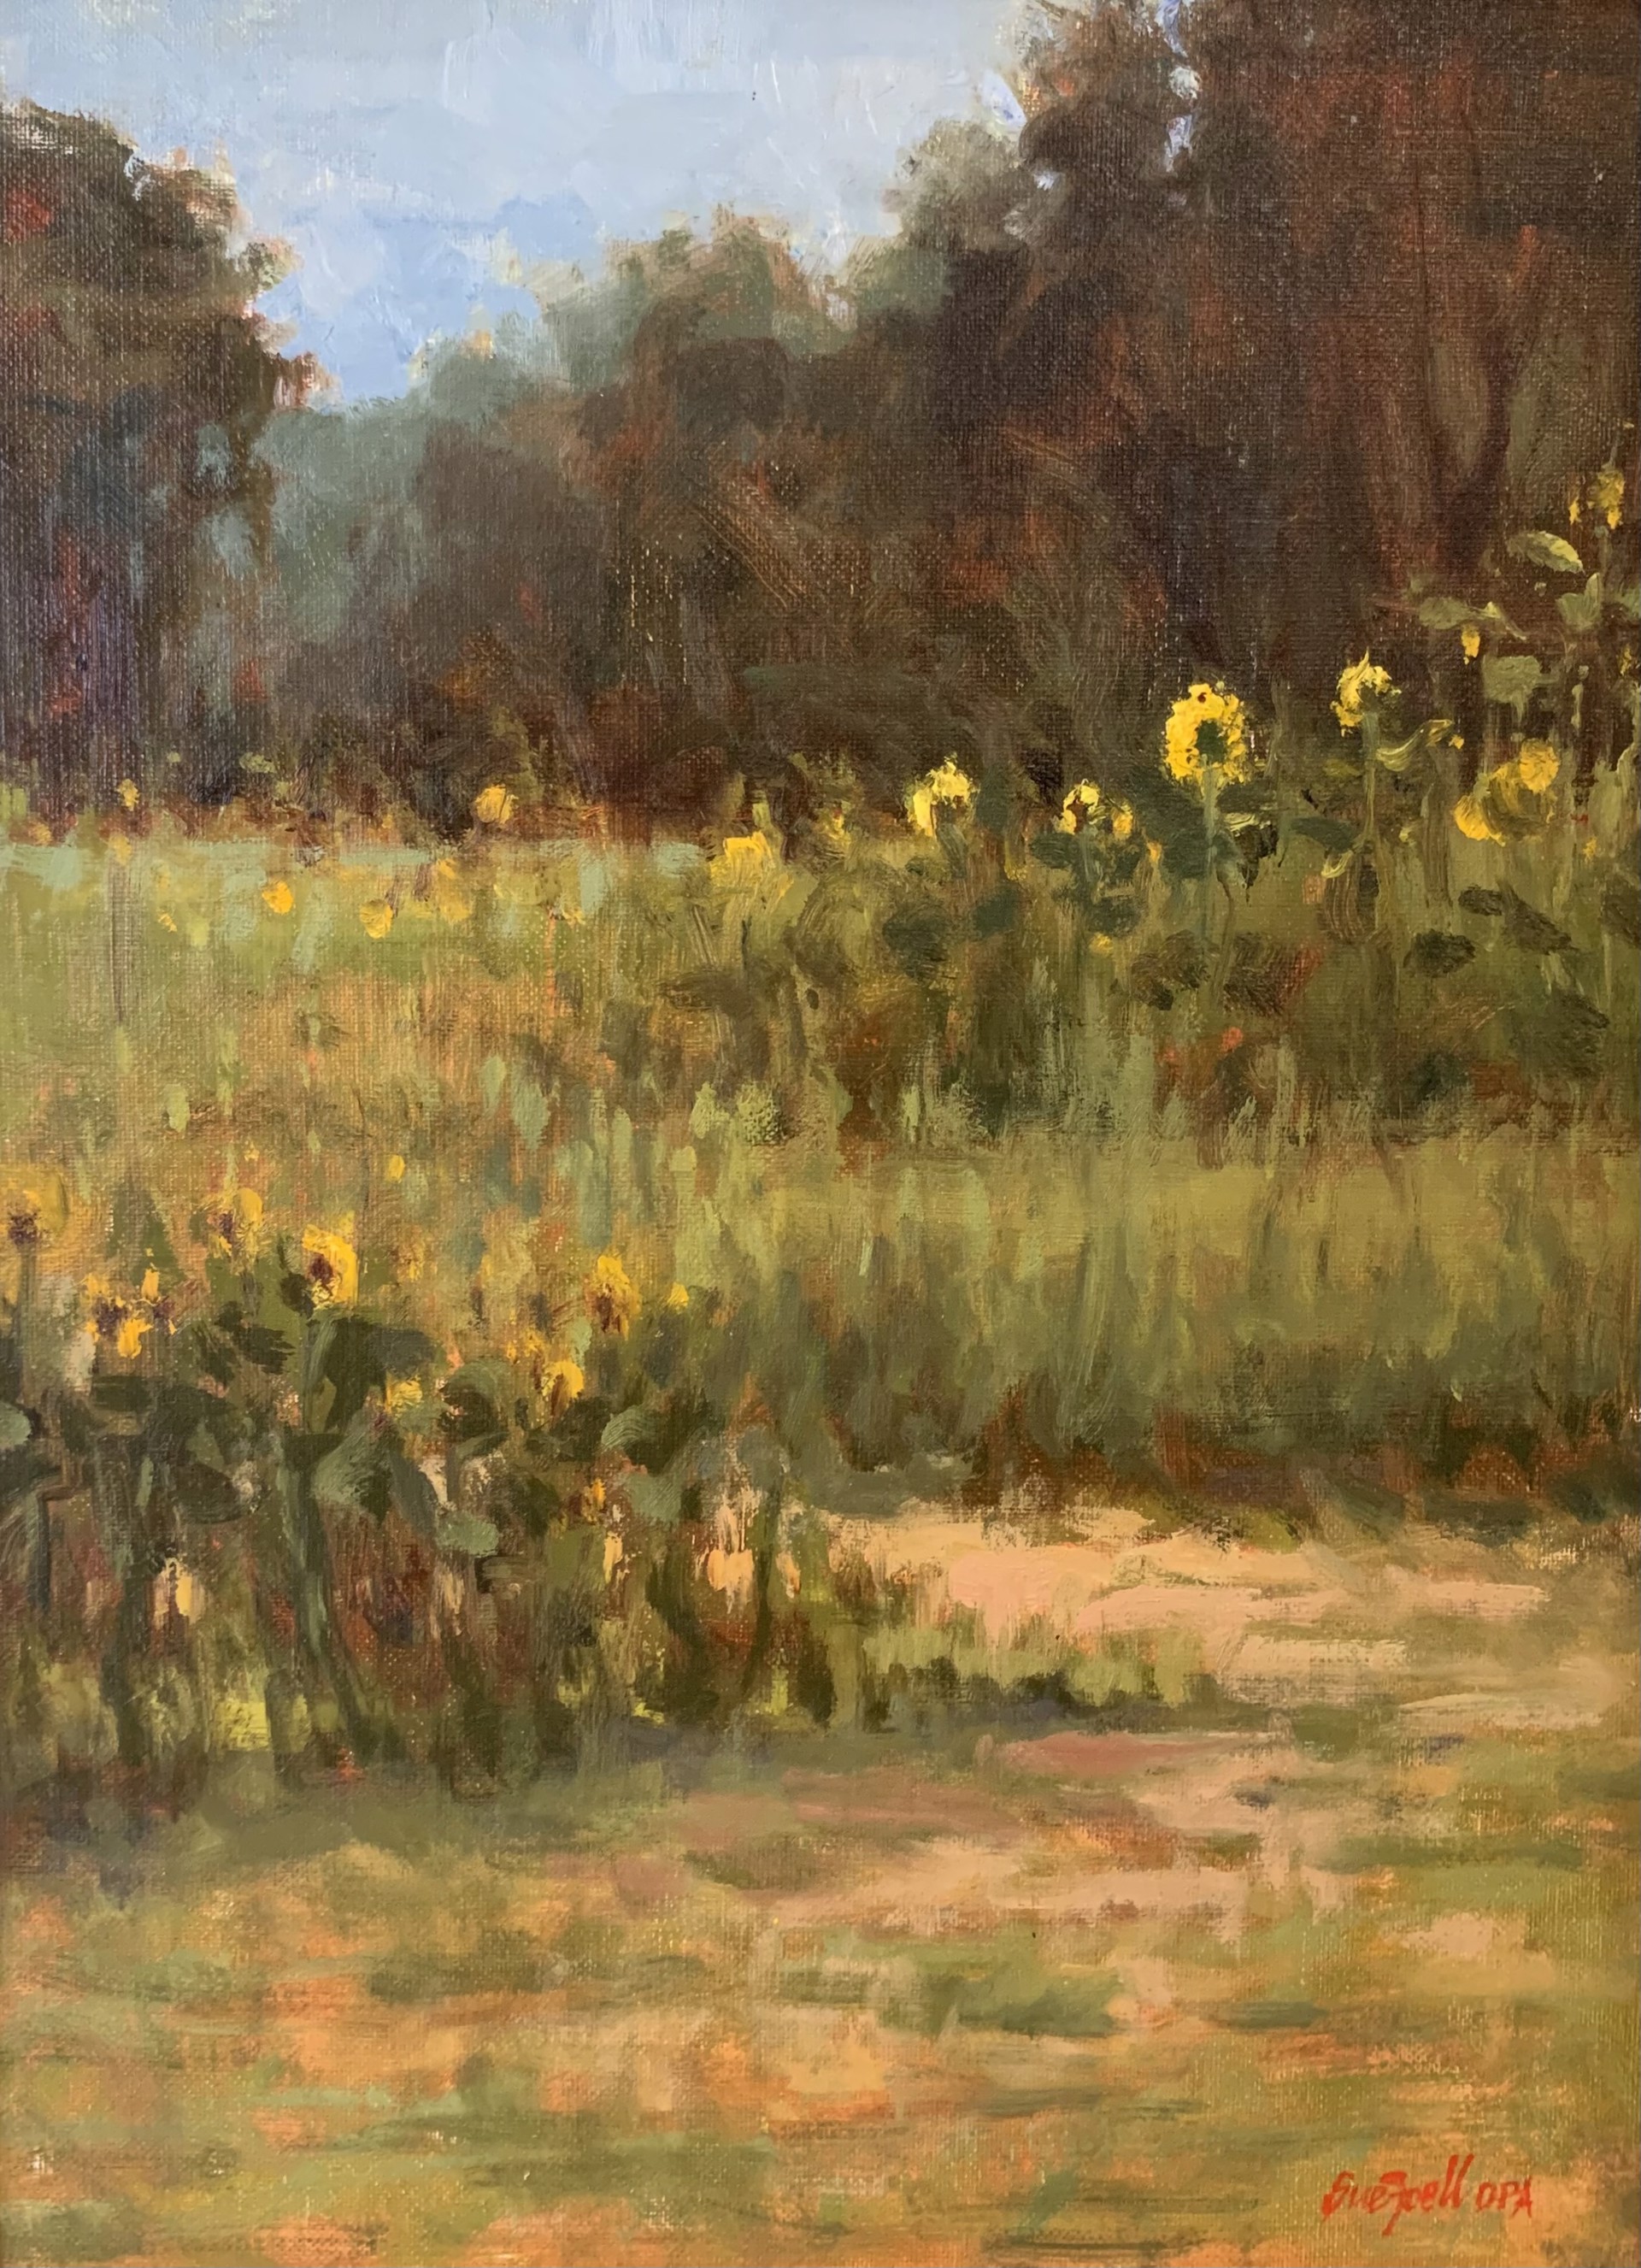 Field of Sunflowers by Sue Foell